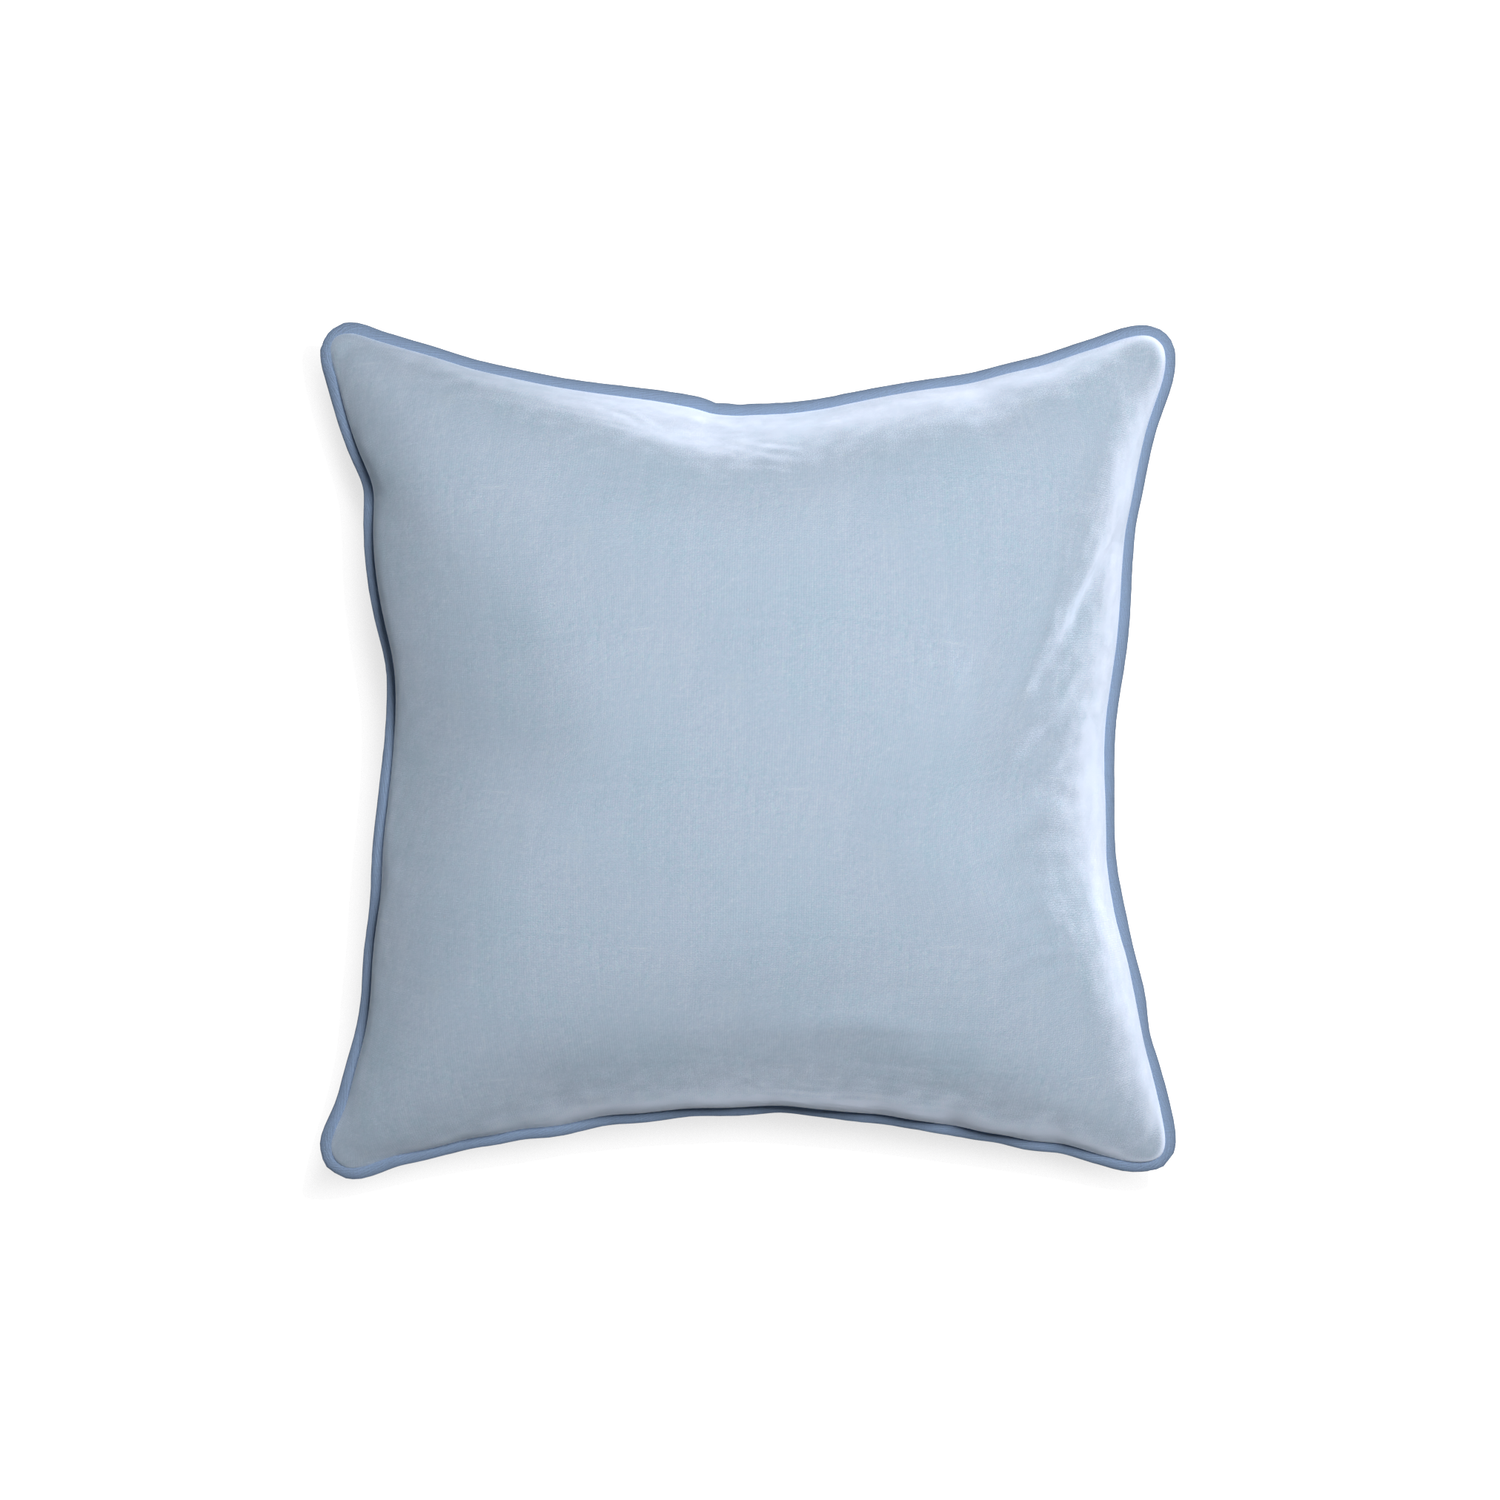 square light blue velvet pillow with sky blue piping